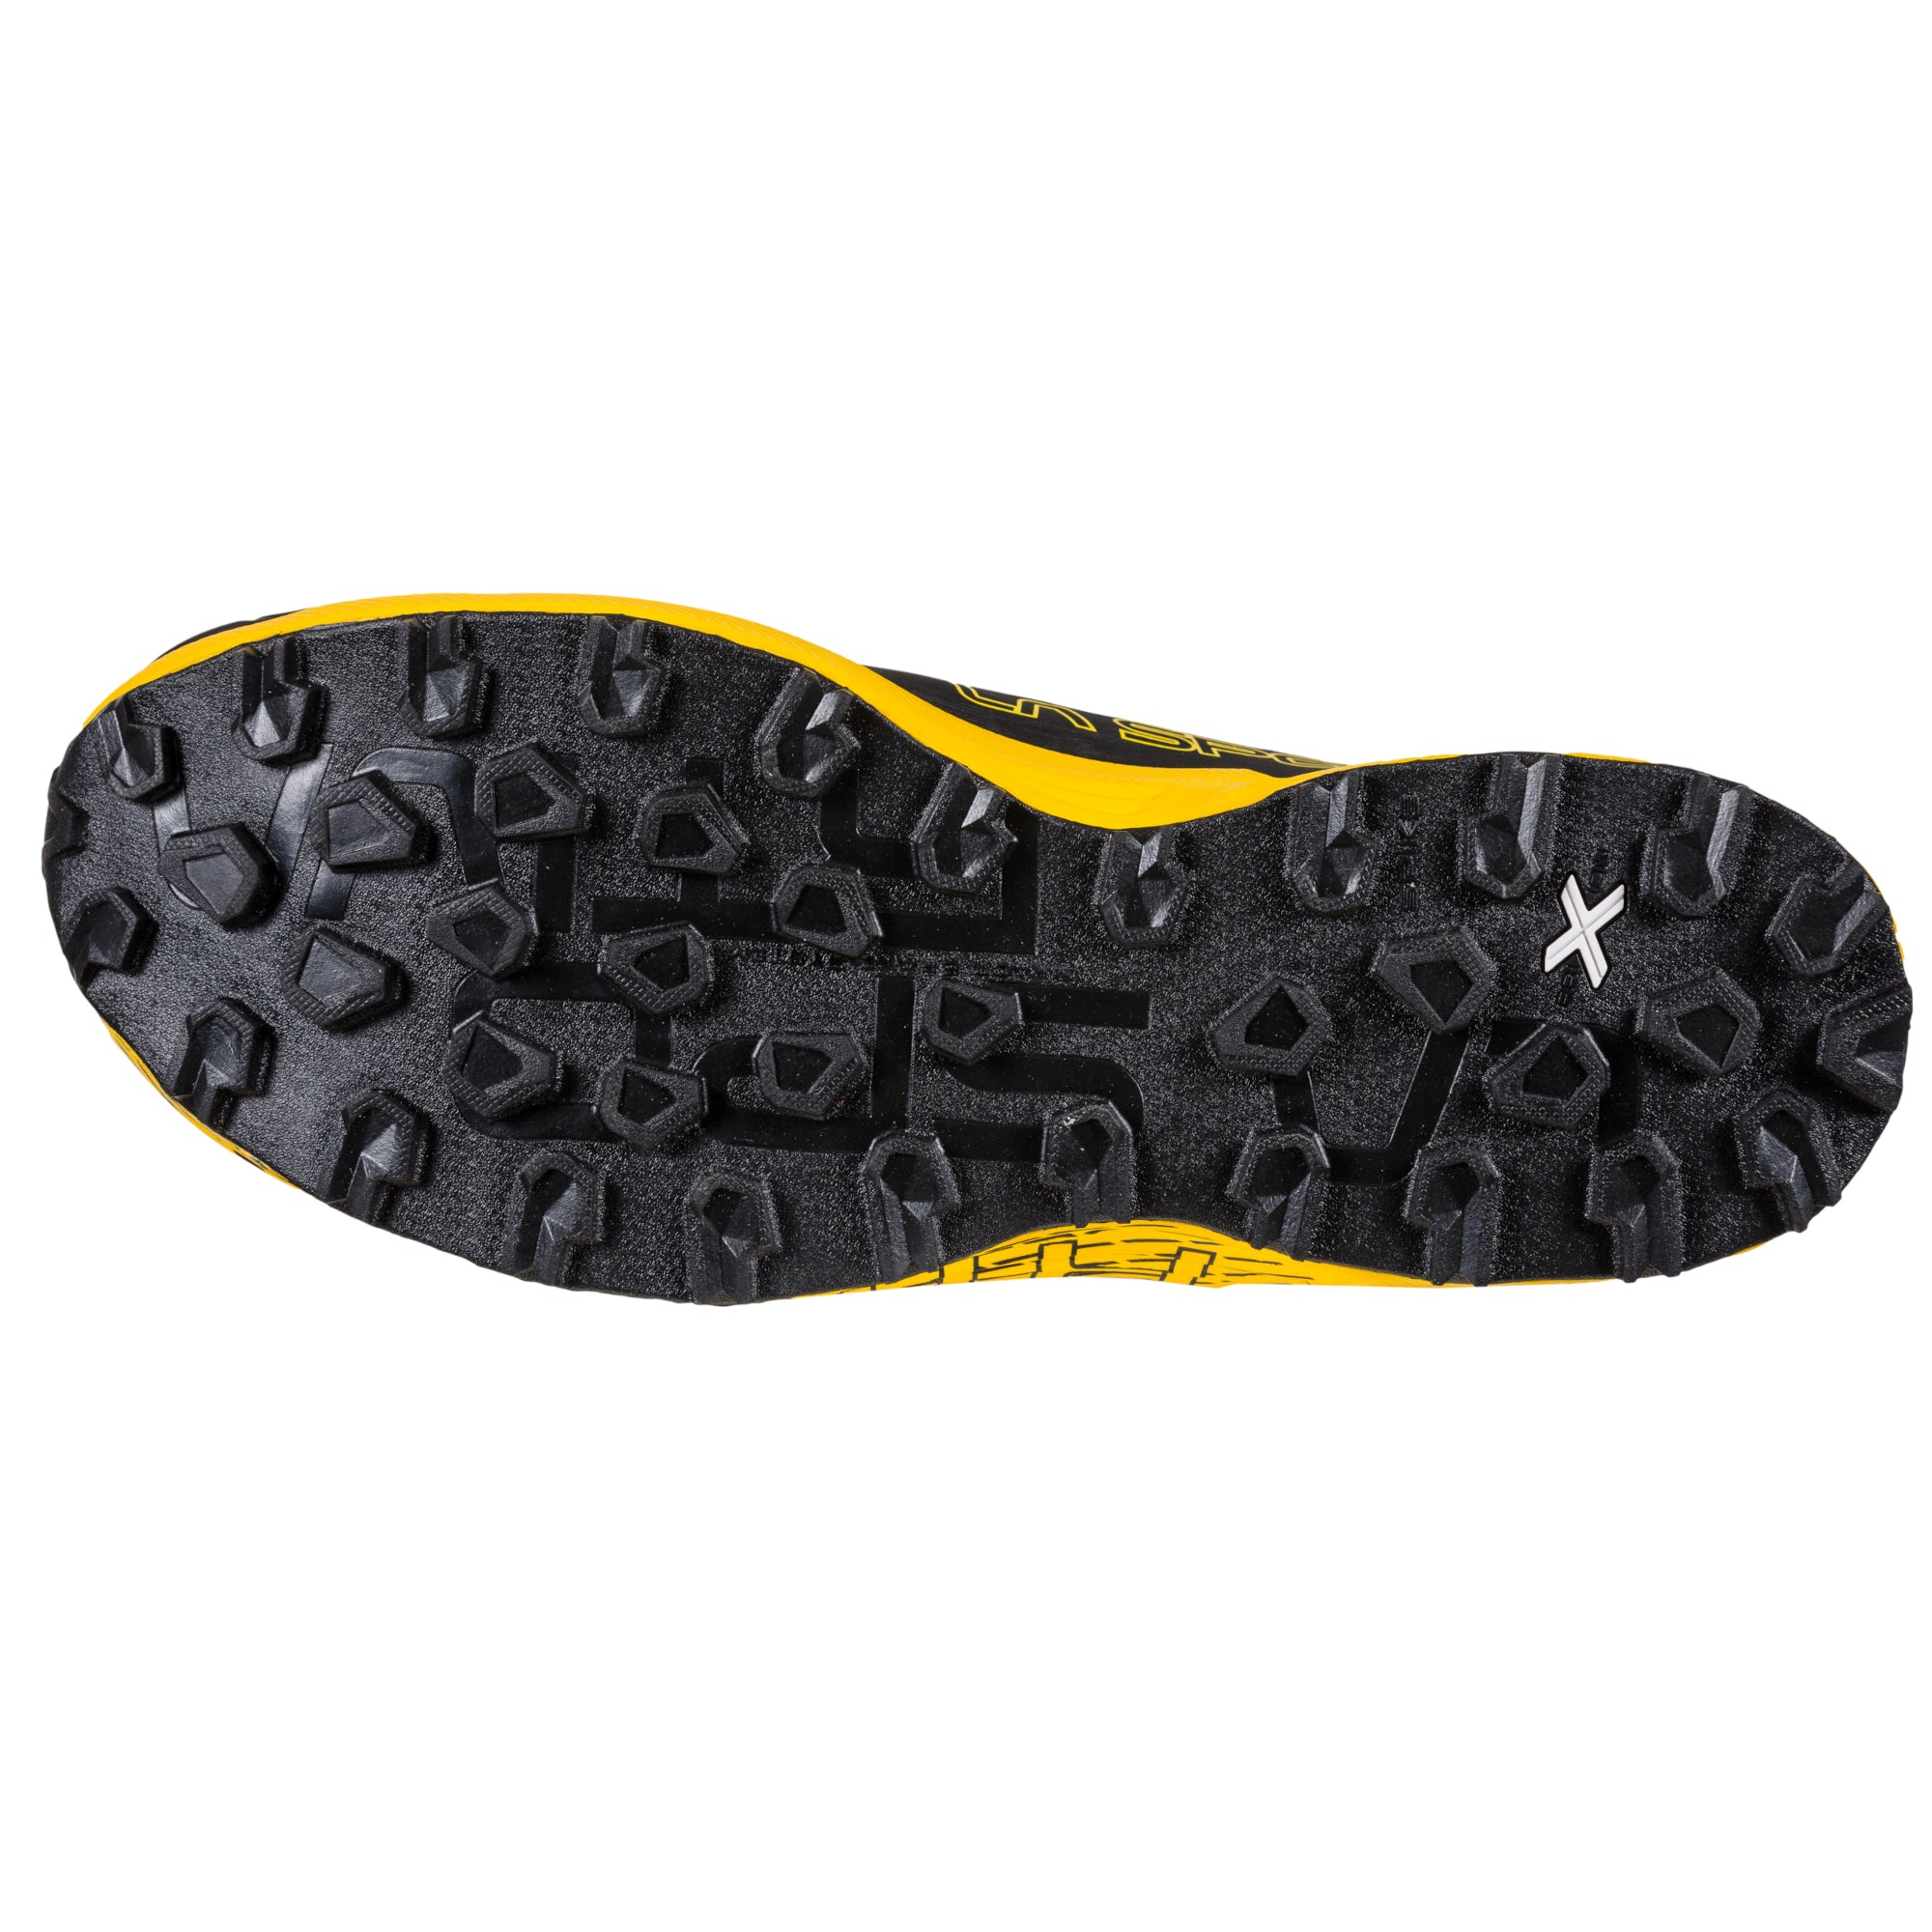 La Sportiva Cyklon Cross GTX black-yellow running shoe